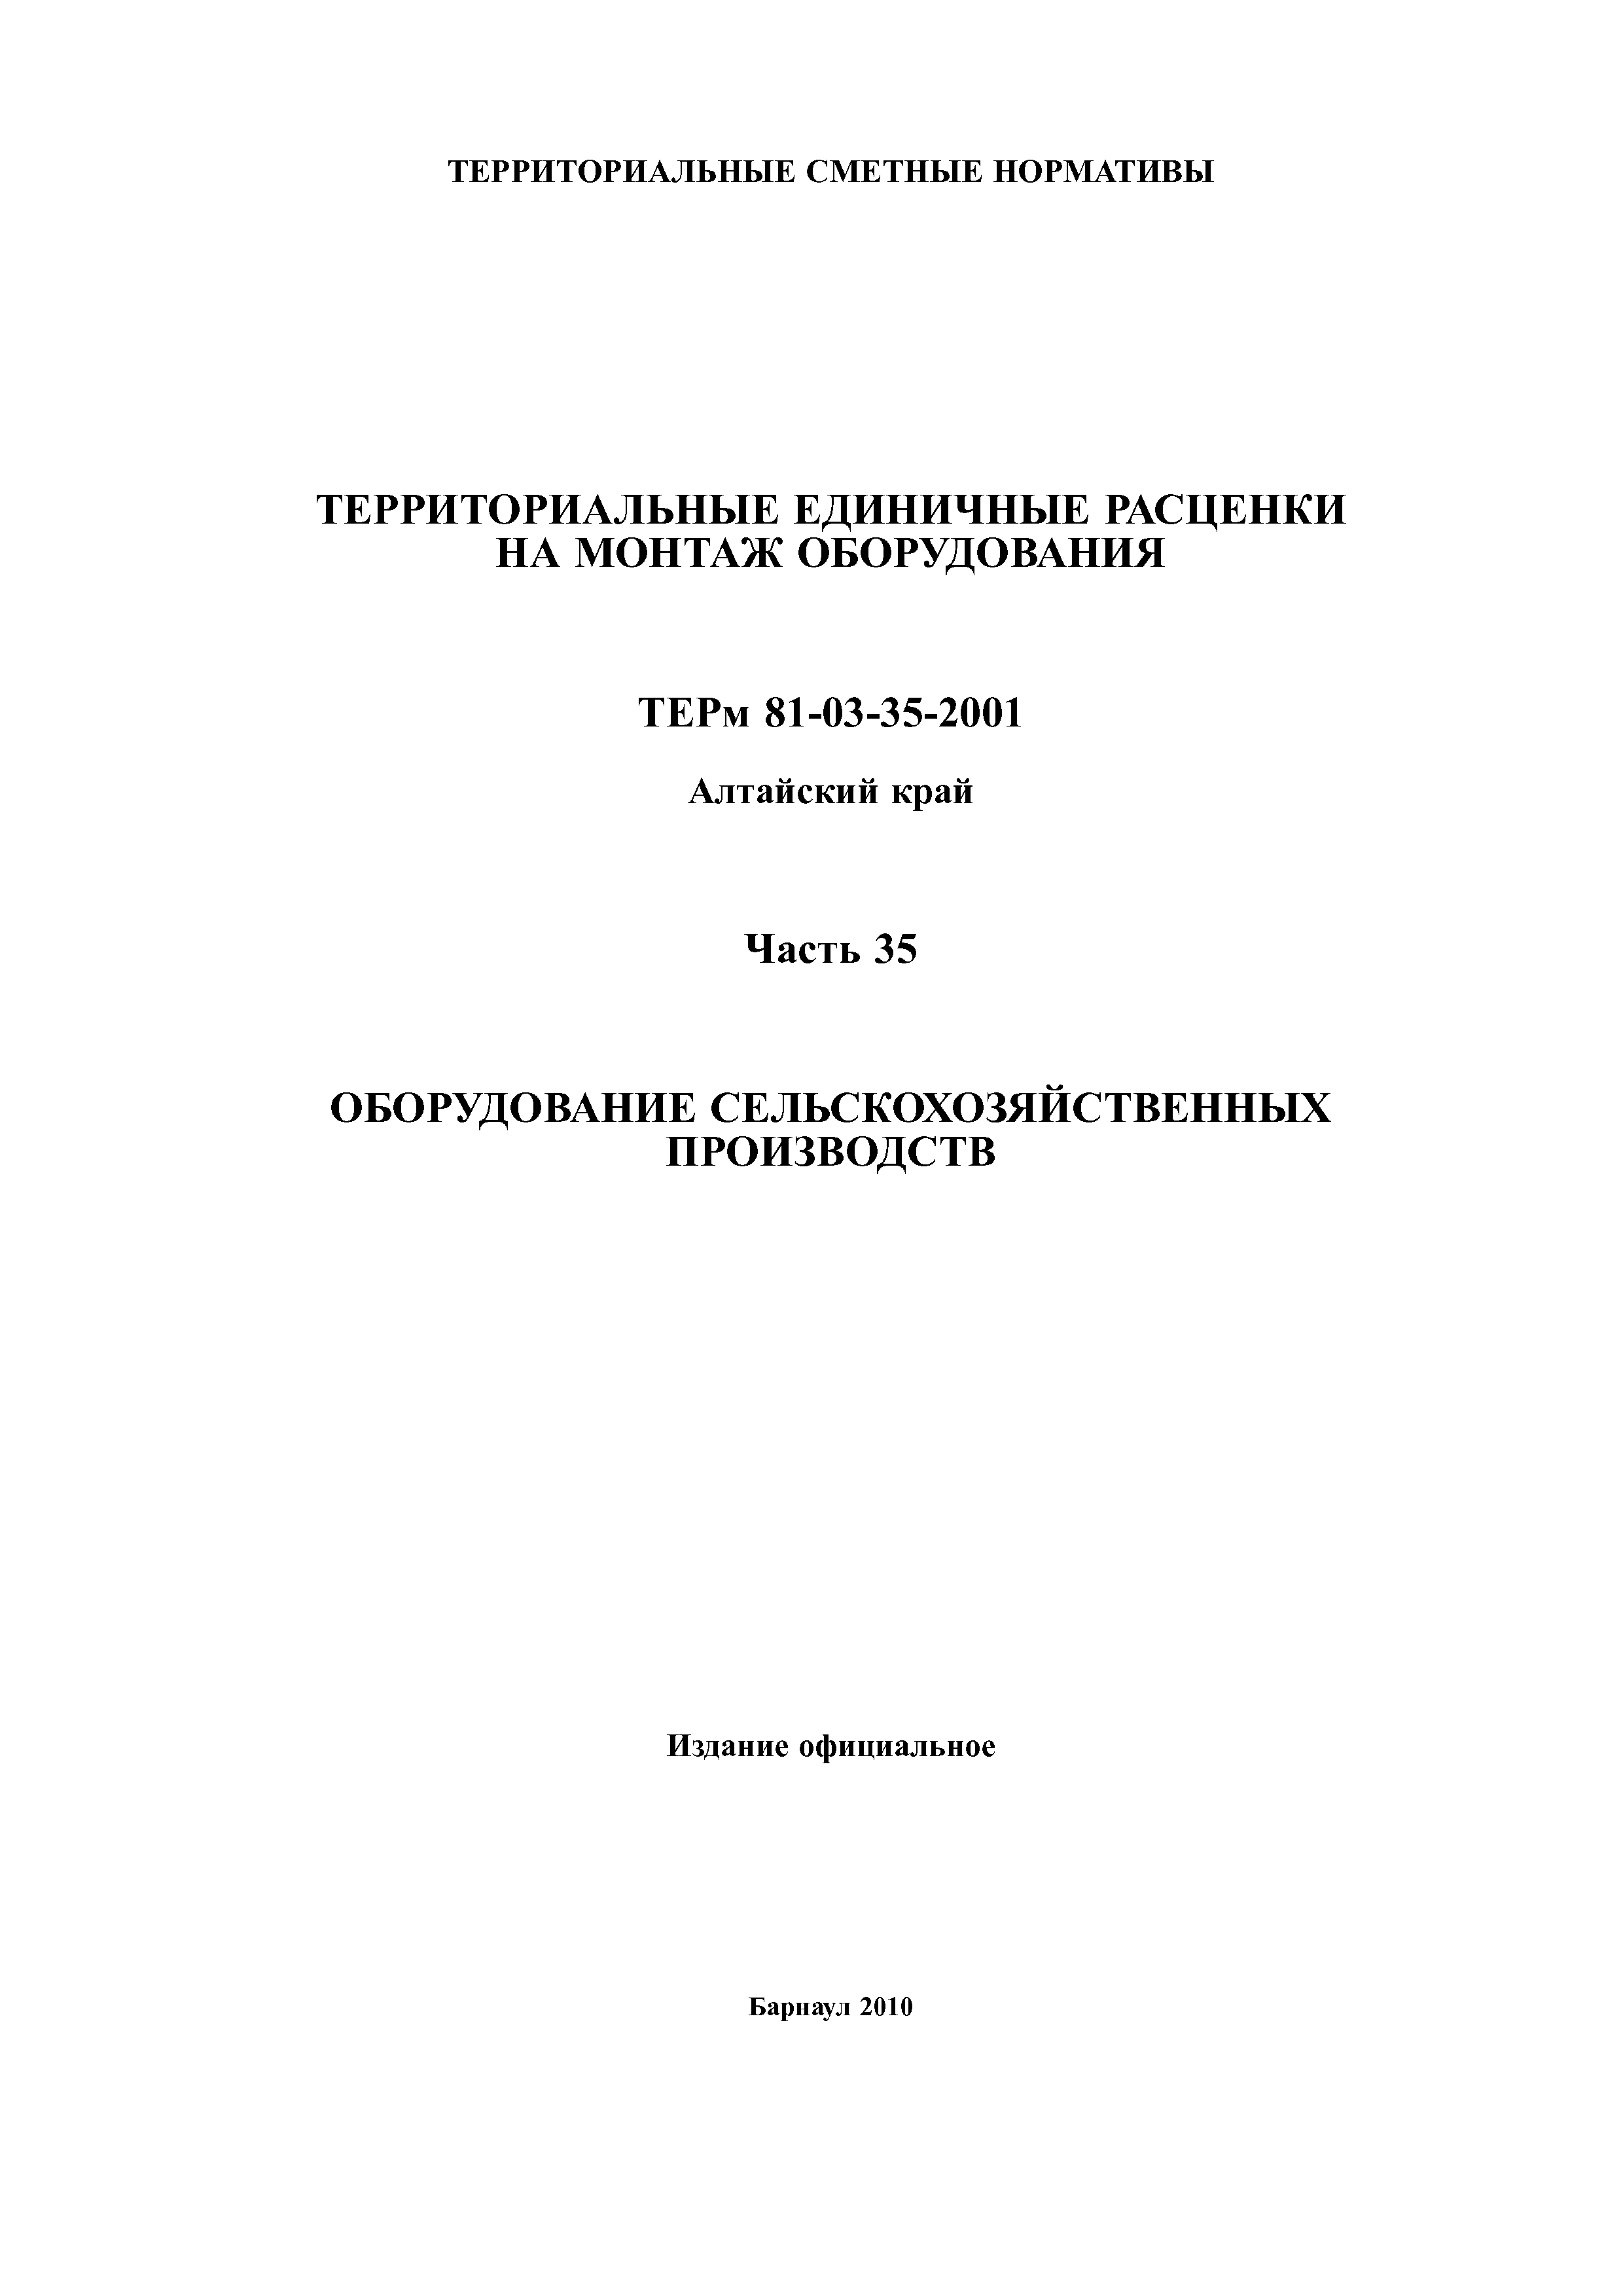 ТЕРм Алтайский край 81-03-35-2001